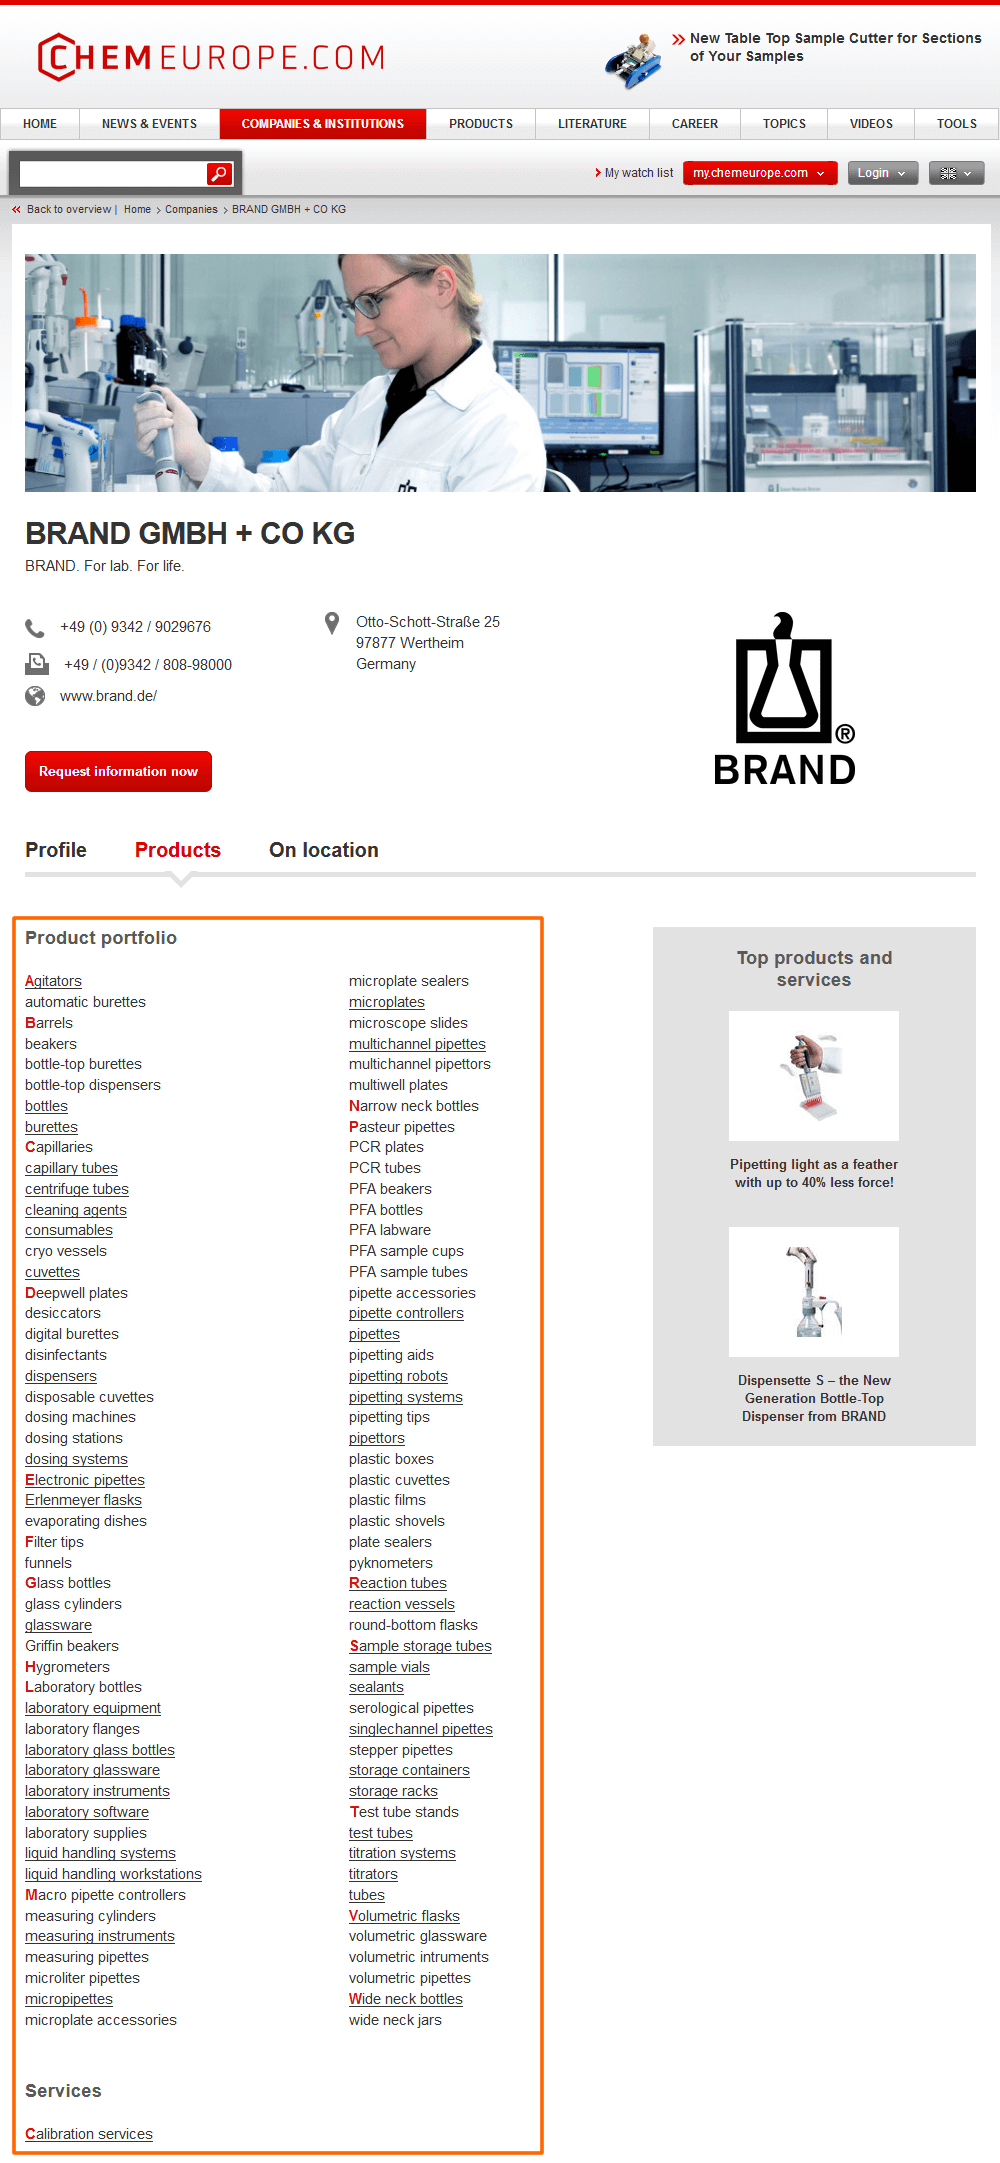 BRAND product portfolio